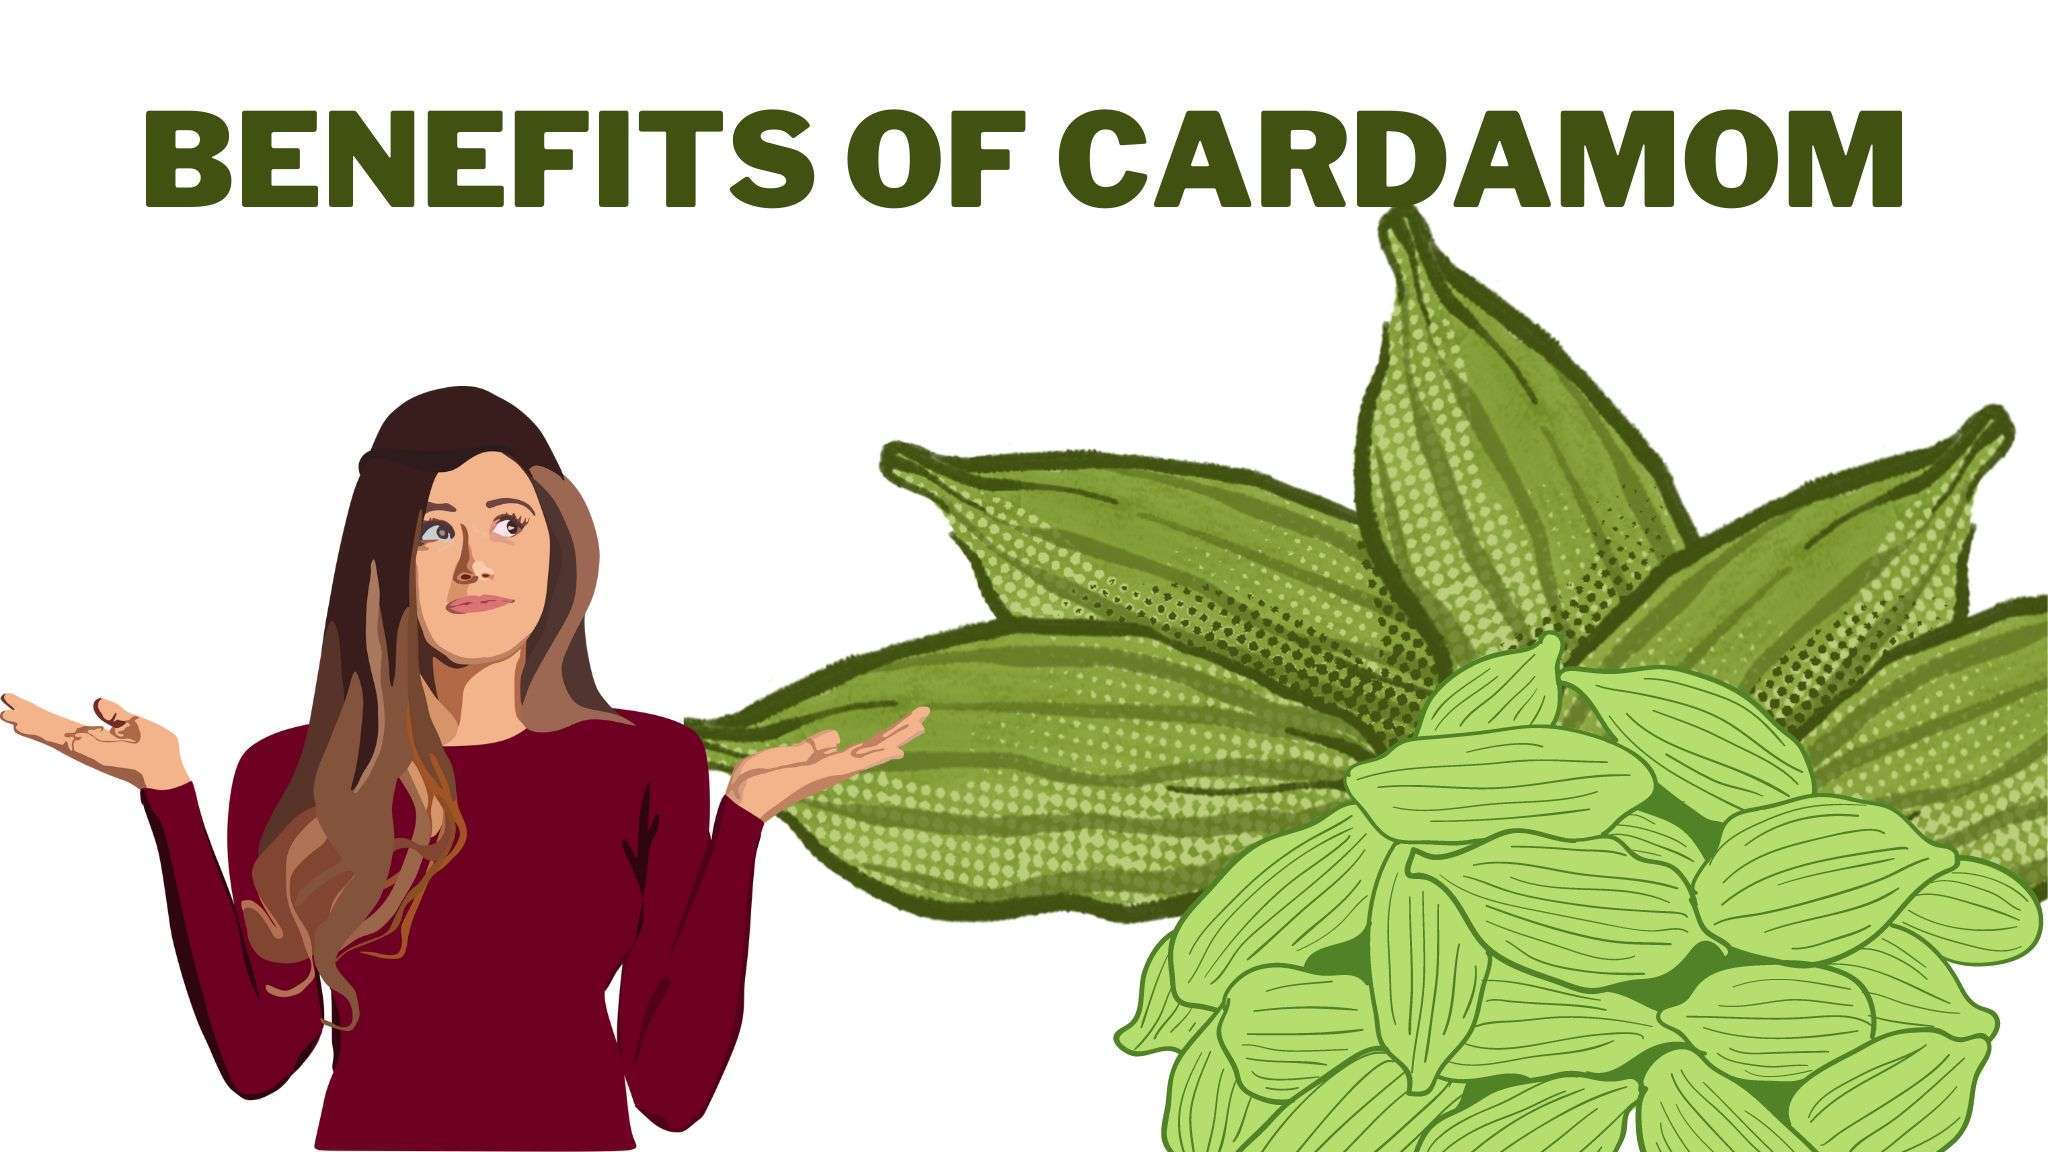 Health and Wellness of Cardamom